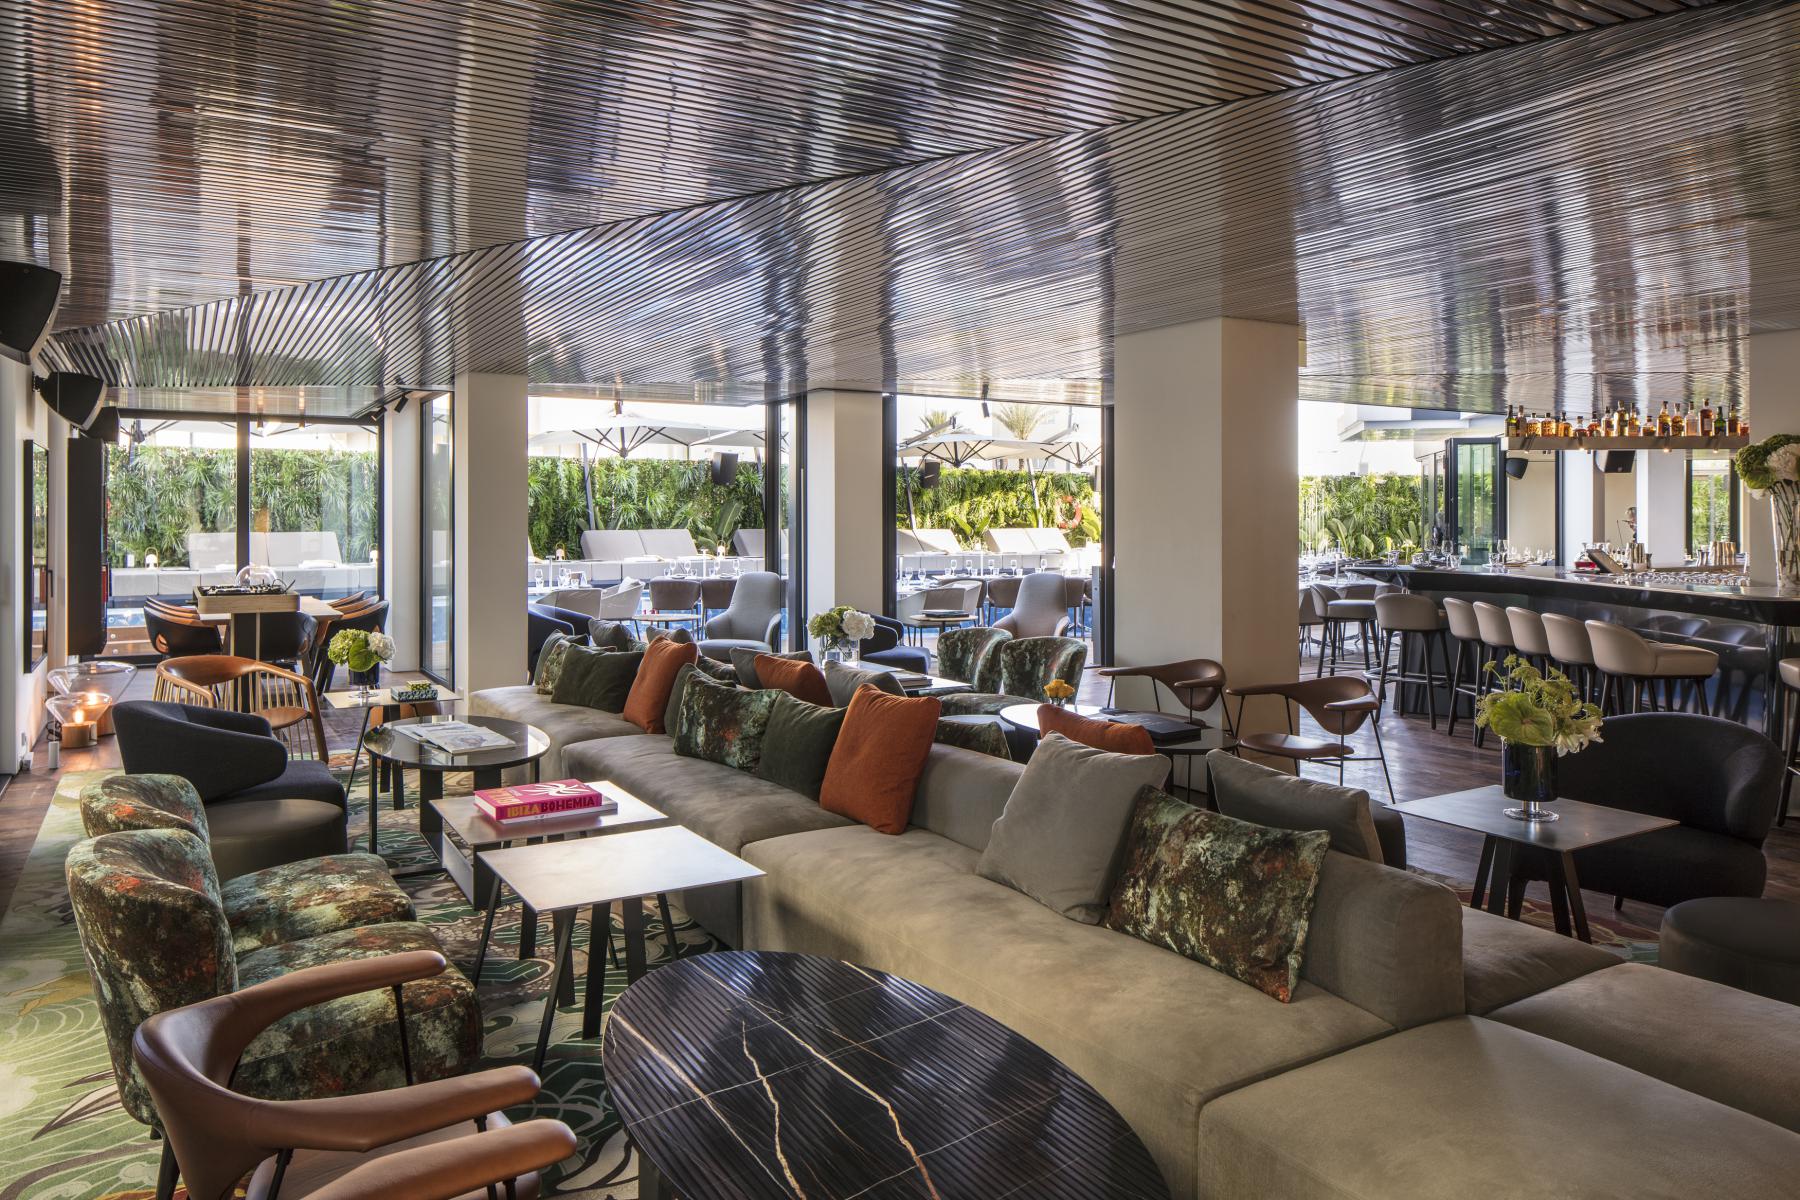 Sir Joan Hotel Interiors in Ibiza by Baranowitz + Kronenberg